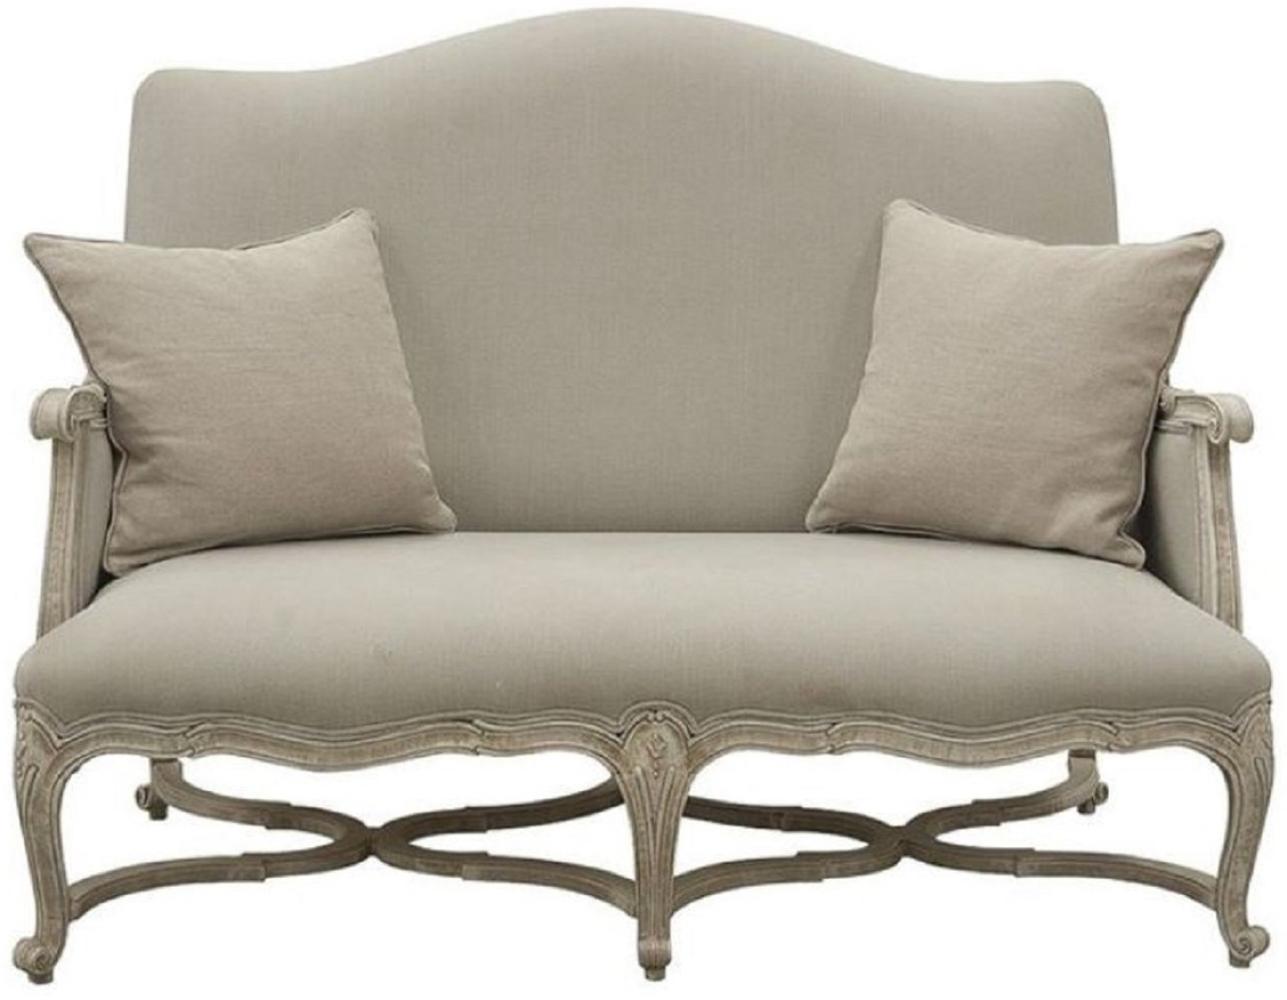 Casa Padrino Luxus Barock Sofa Grau / Antik Grau 150 x 100 x H. 115 cm - Wohnzimmer Sofa mit dekorativen Kissen Bild 1